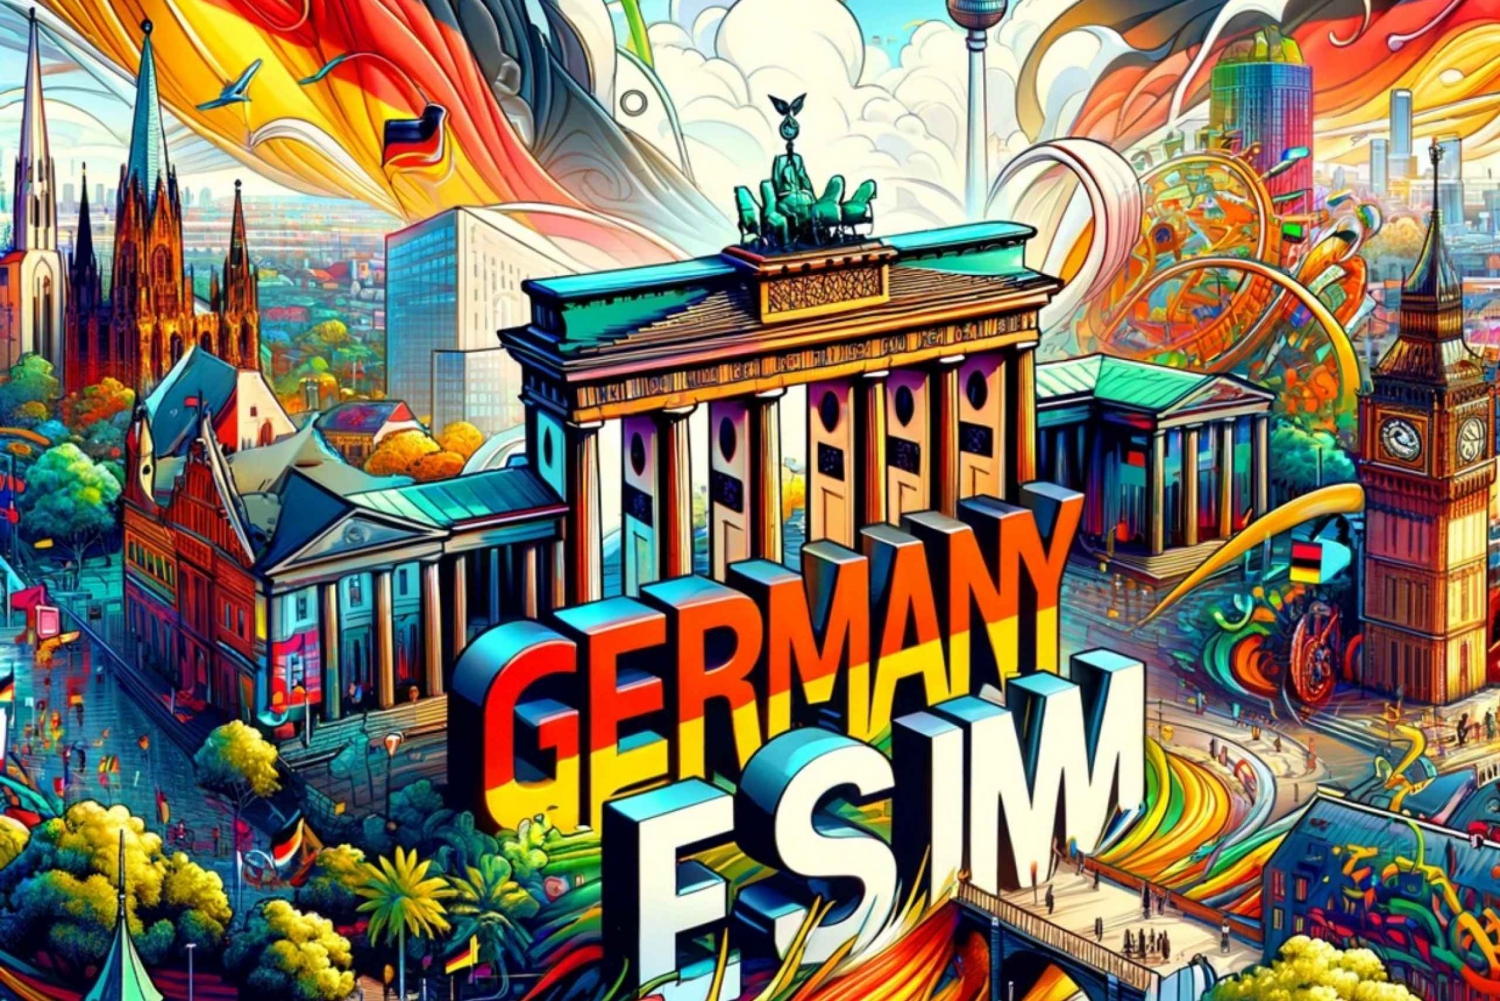 Tyskland eSIM Obegränsad data